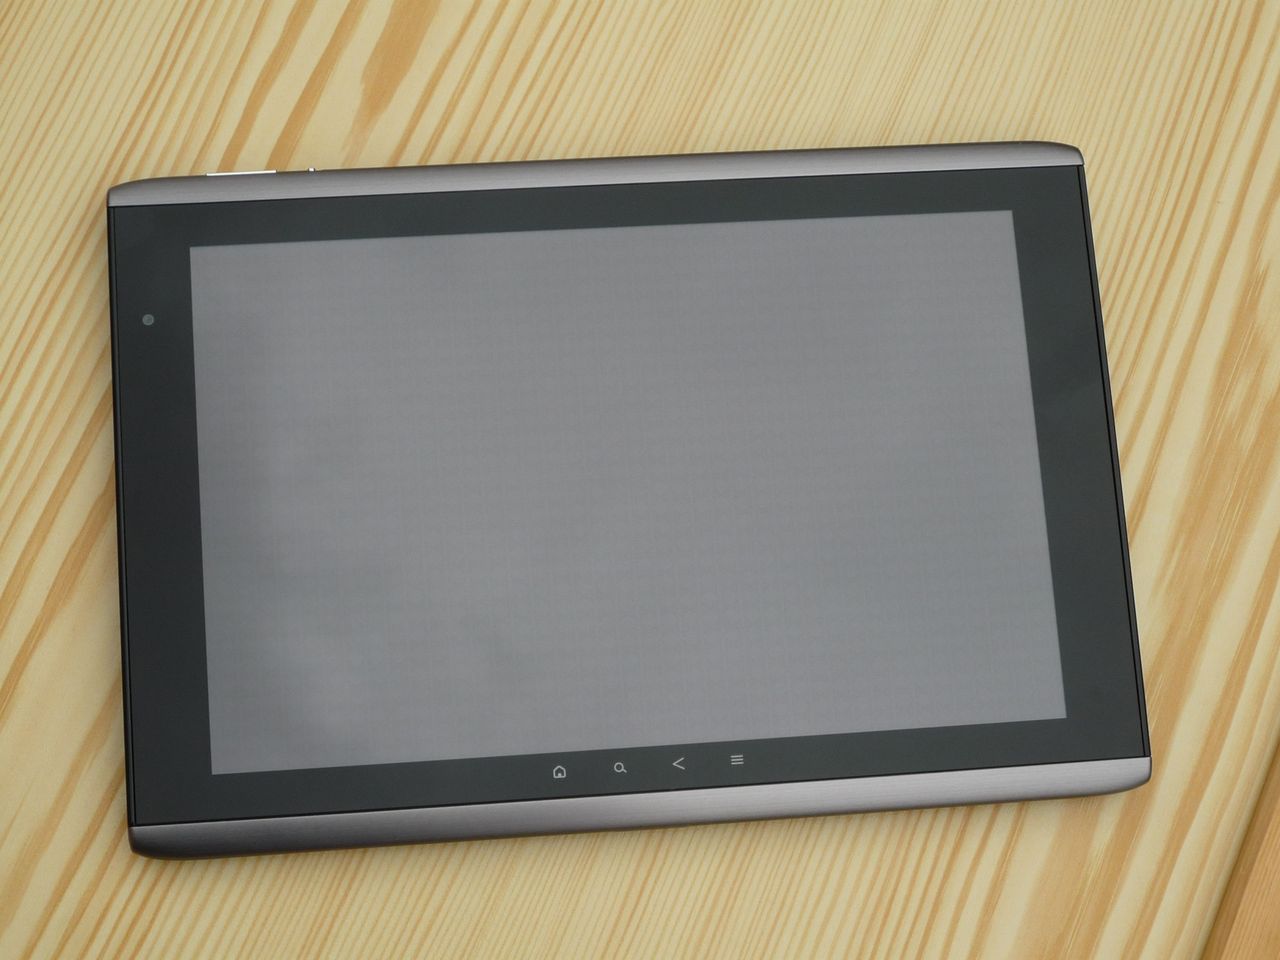 Acer Iconia Tab A500 - dobry i tani konkurent iPada? [test]